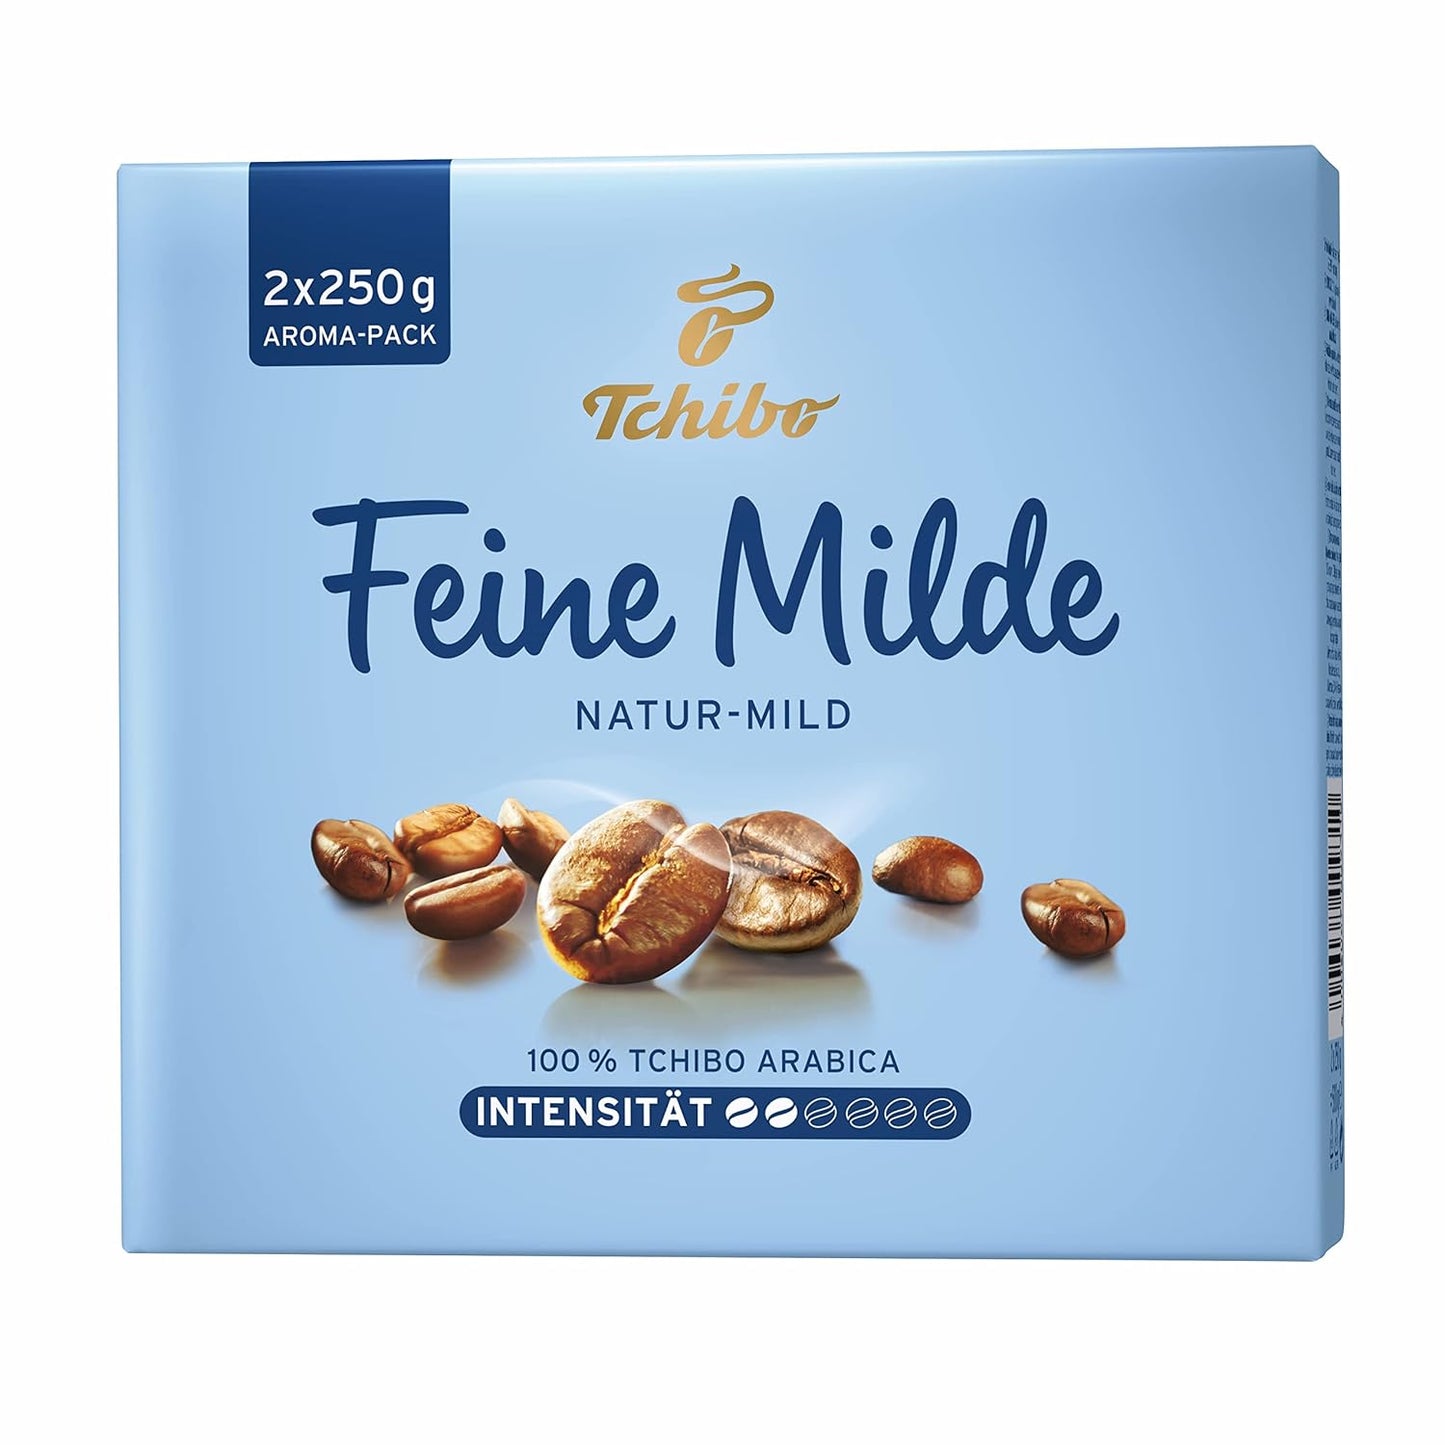 Tchibo Feine Milde Naturmild 8.8 oz - 2 pack